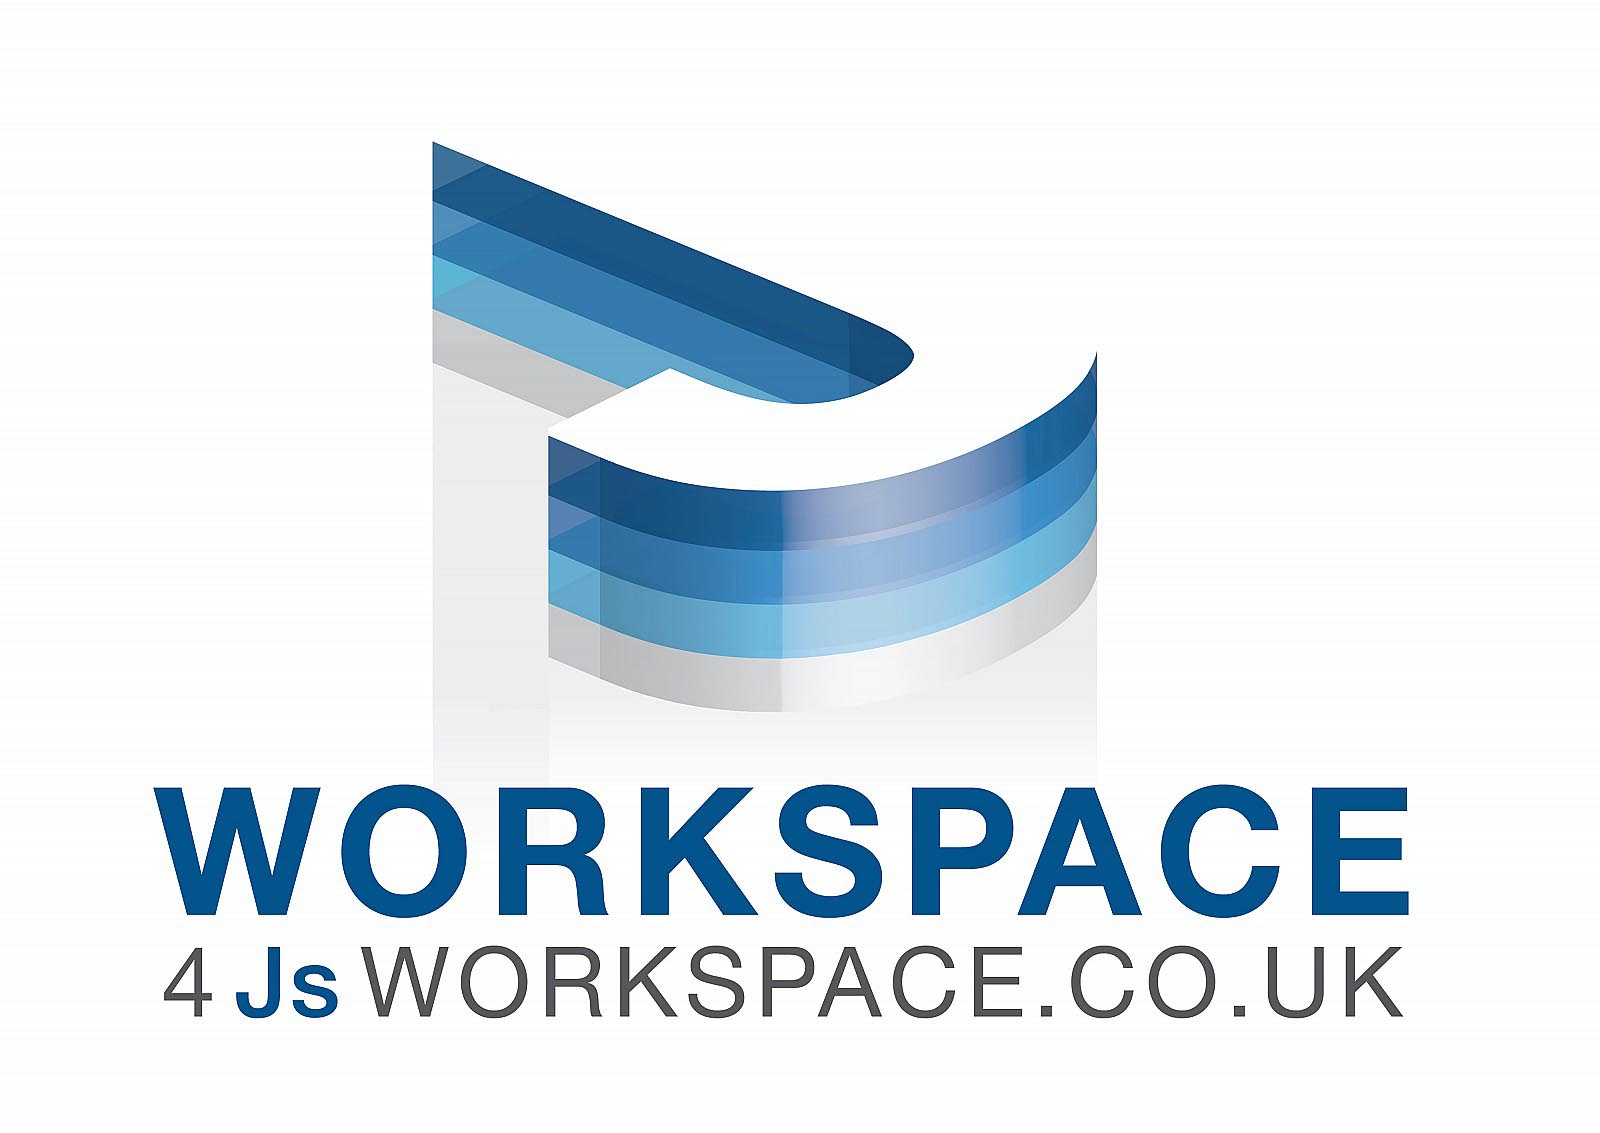 4 J's Workspace